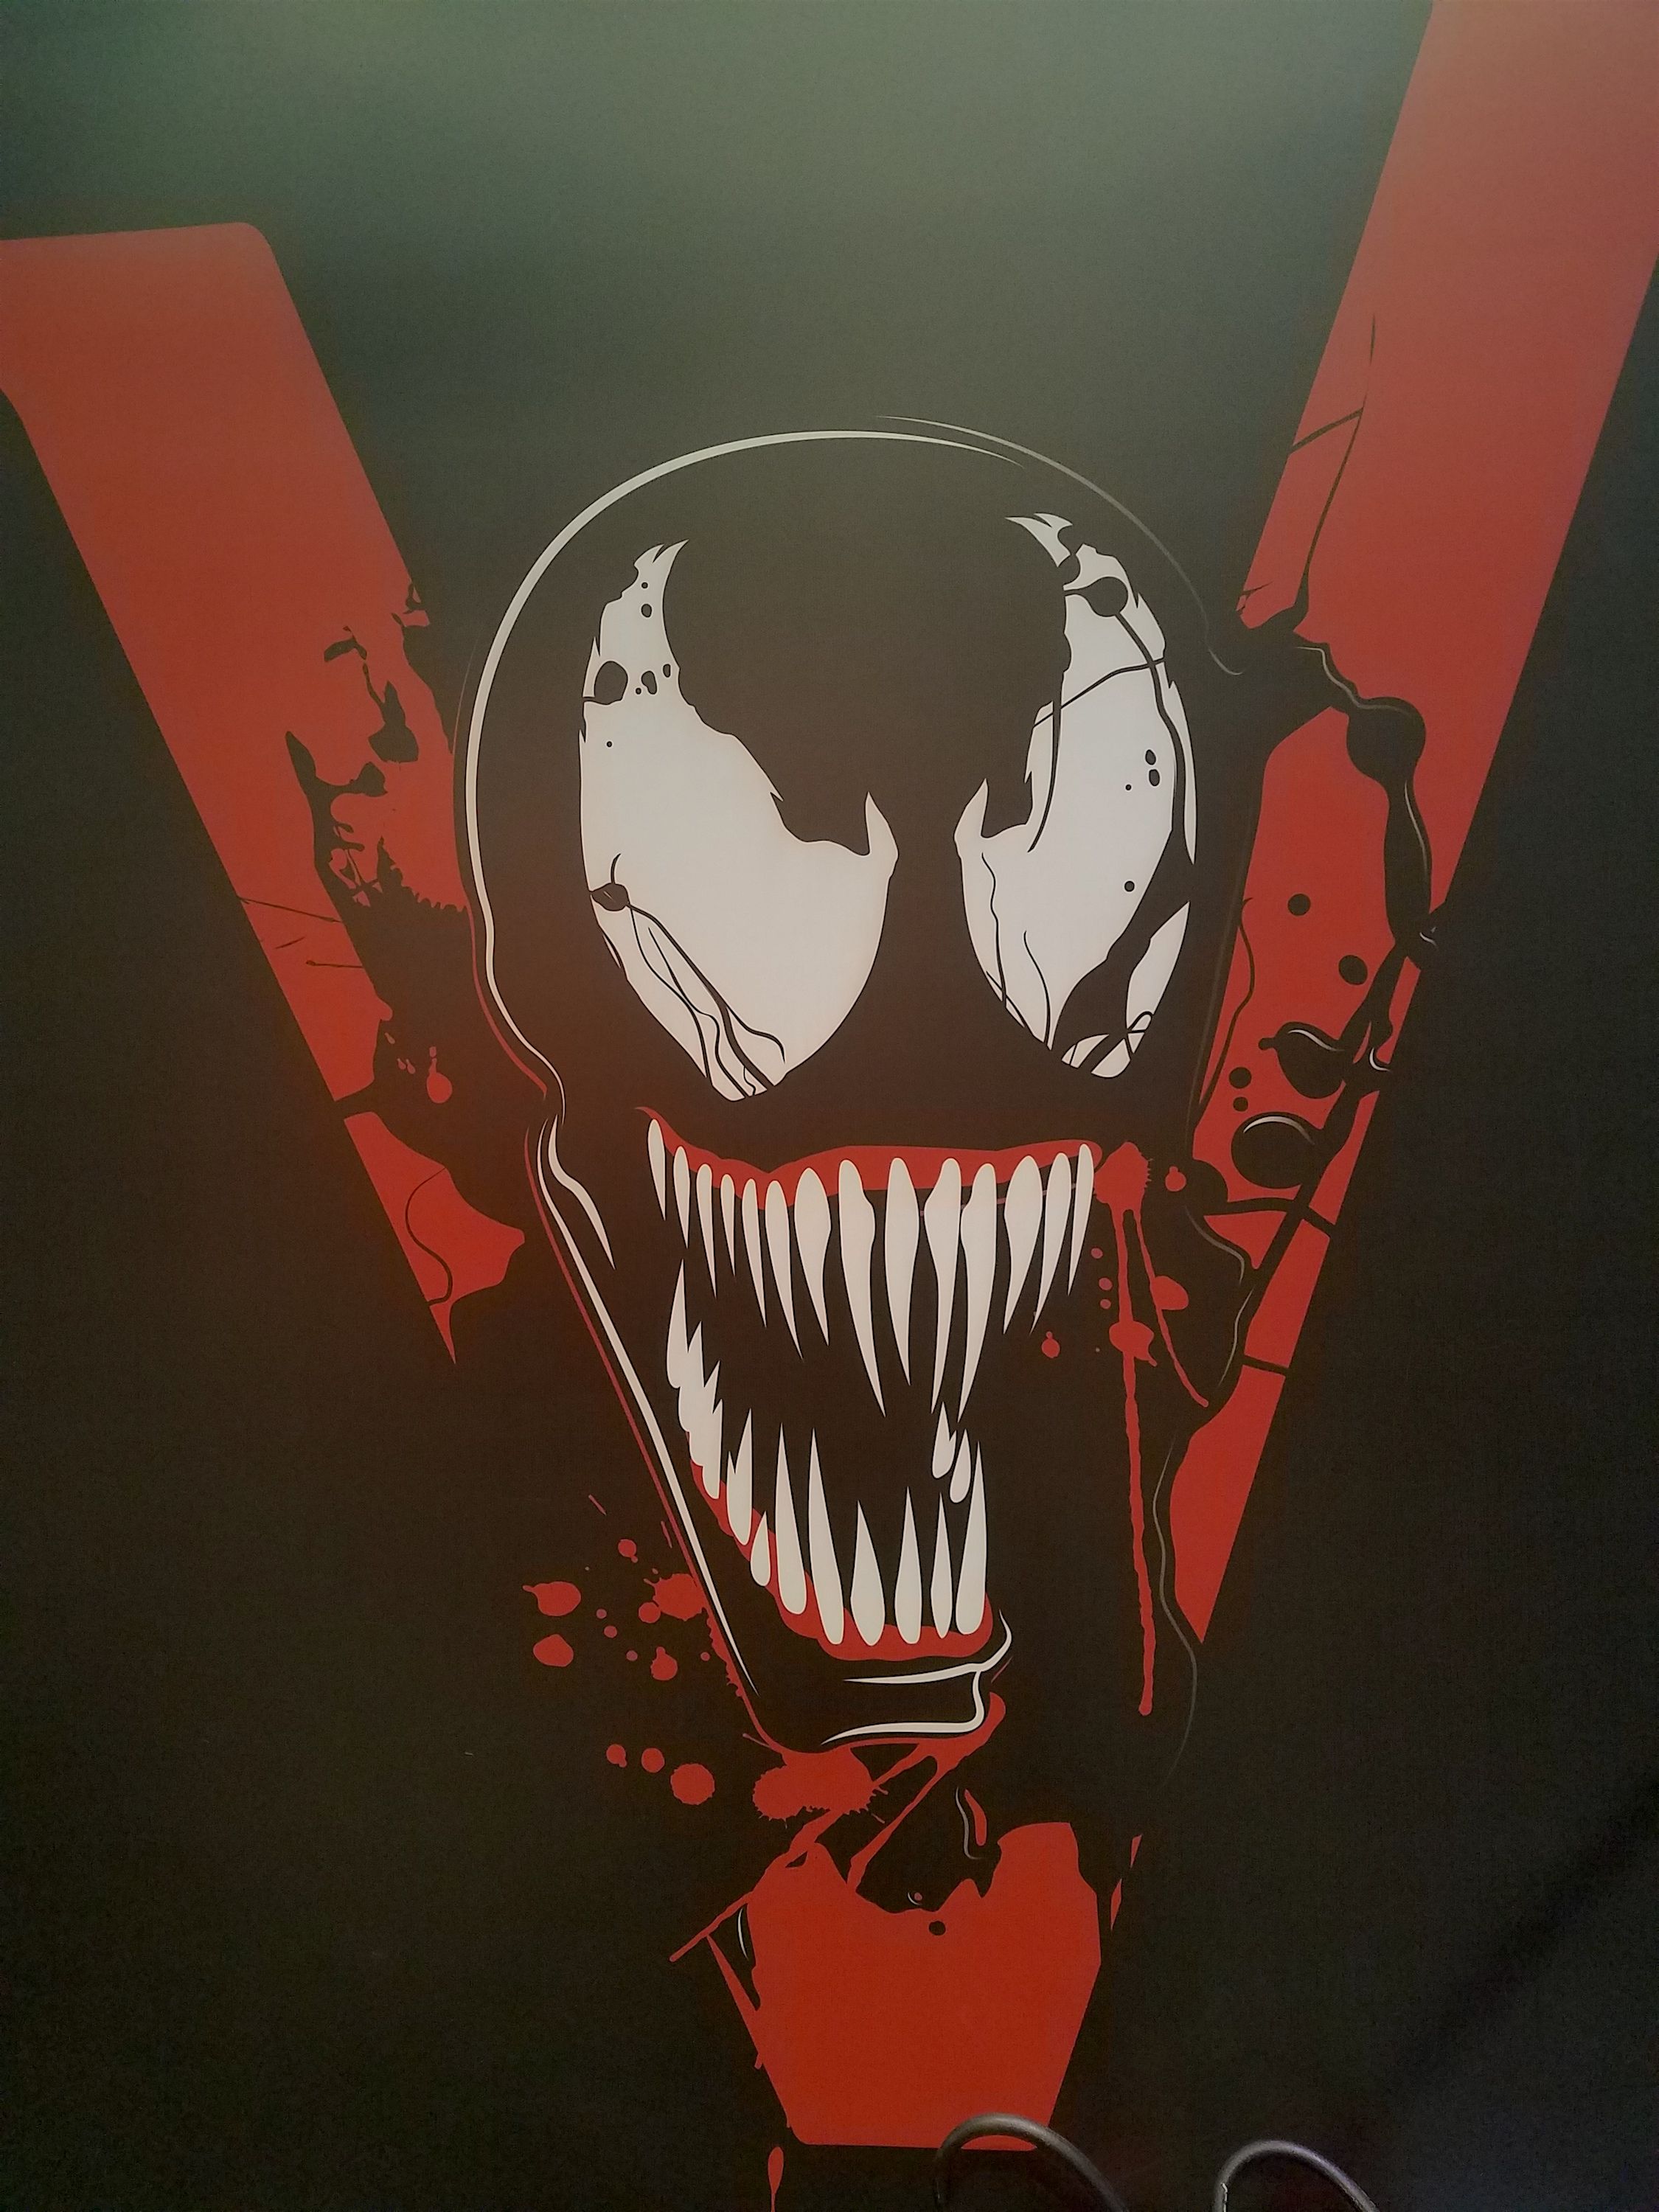 venom-movie-poster-ccxp-image-2.jpg